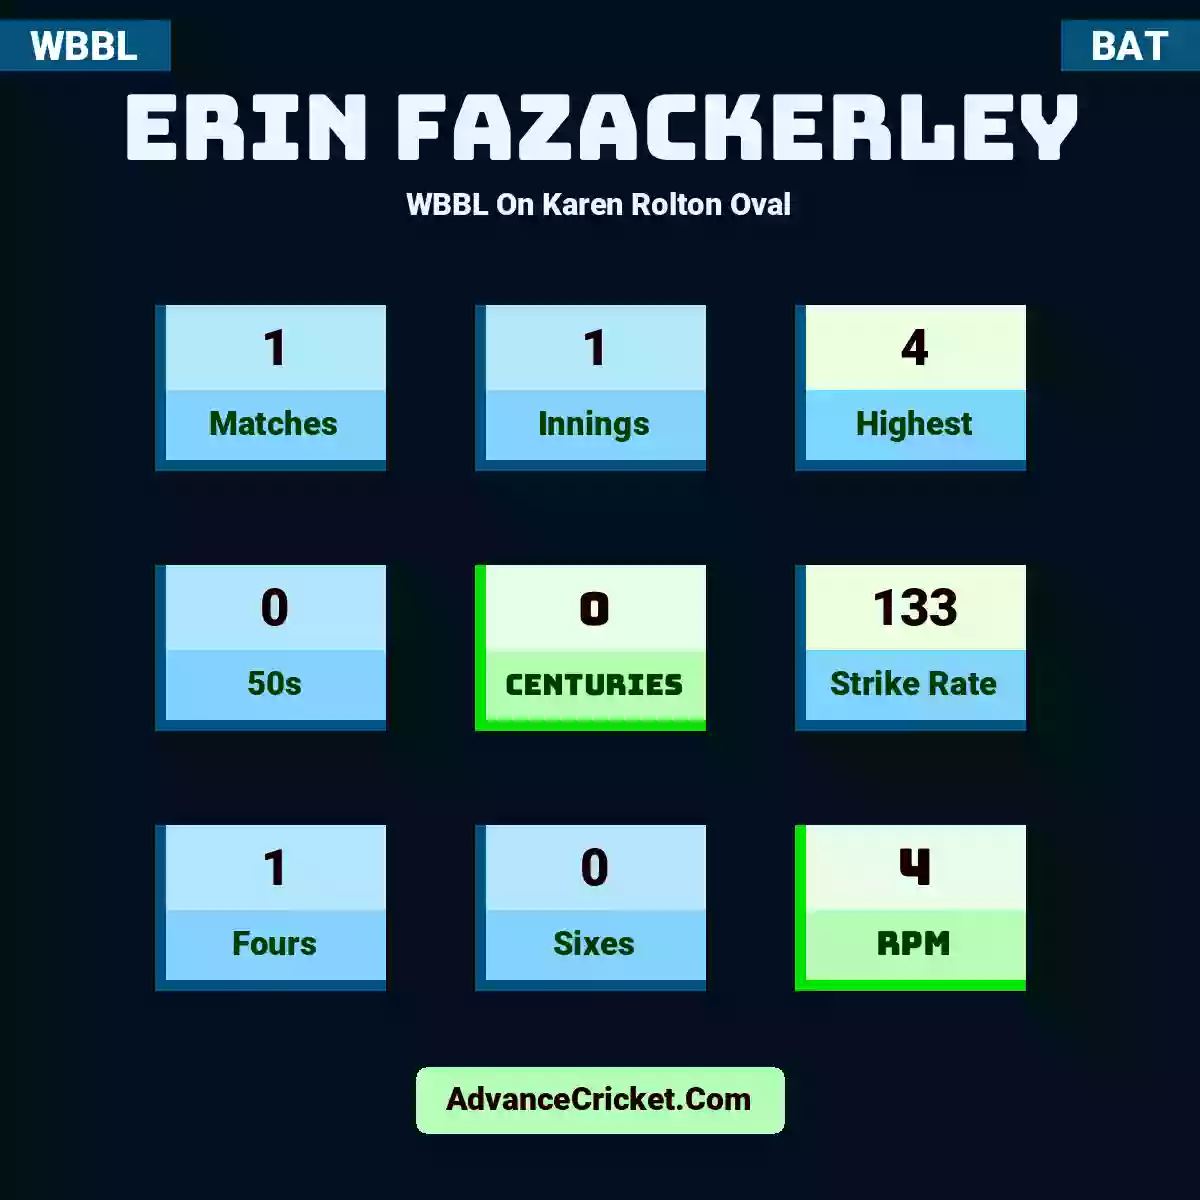 Erin Fazackerley WBBL  On Karen Rolton Oval, Erin Fazackerley played 1 matches, scored 4 runs as highest, 0 half-centuries, and 0 centuries, with a strike rate of 133. E.Fazackerley hit 1 fours and 0 sixes, with an RPM of 4.